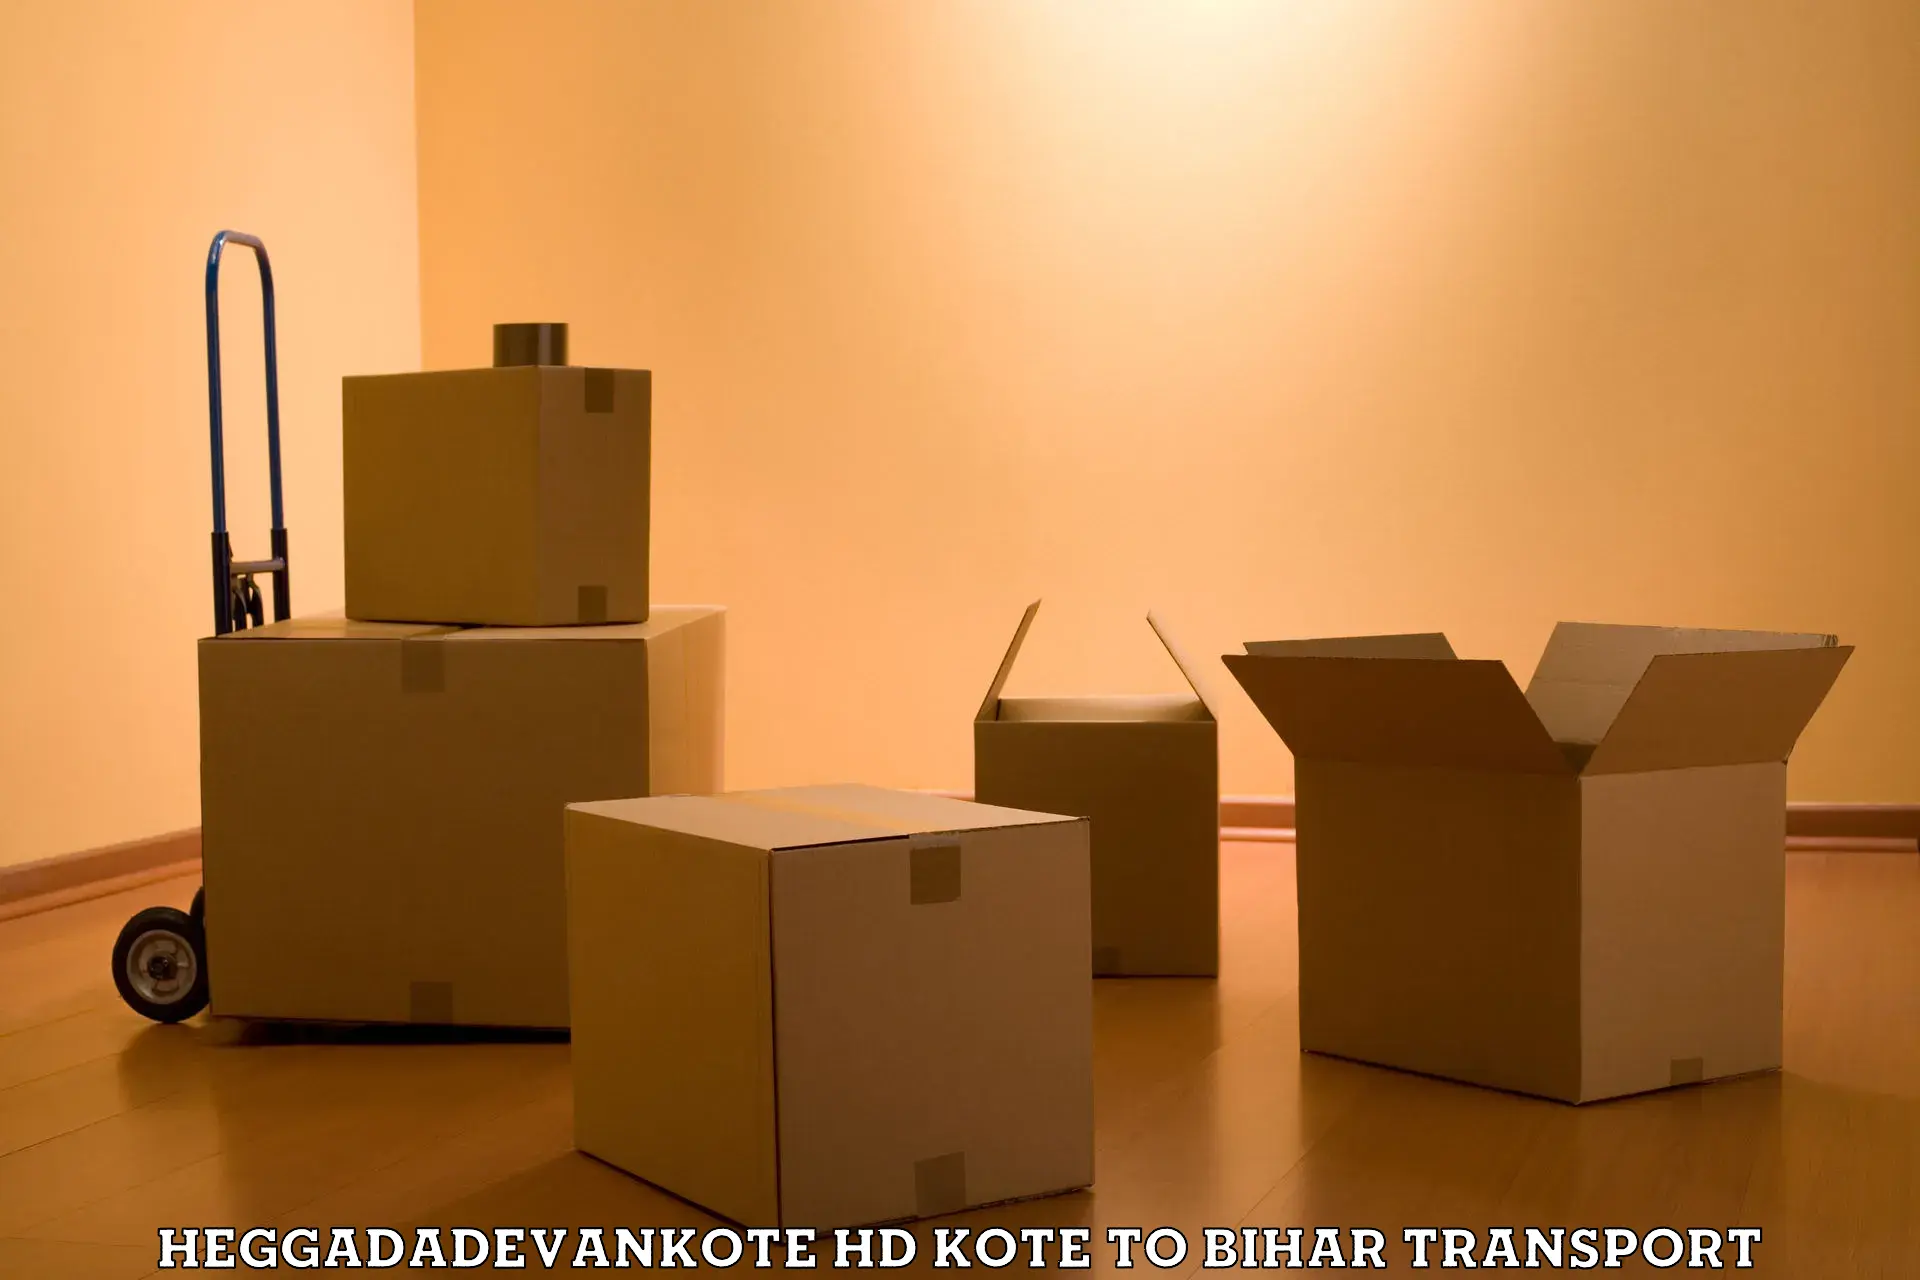 Transport services Heggadadevankote HD Kote to Bihar